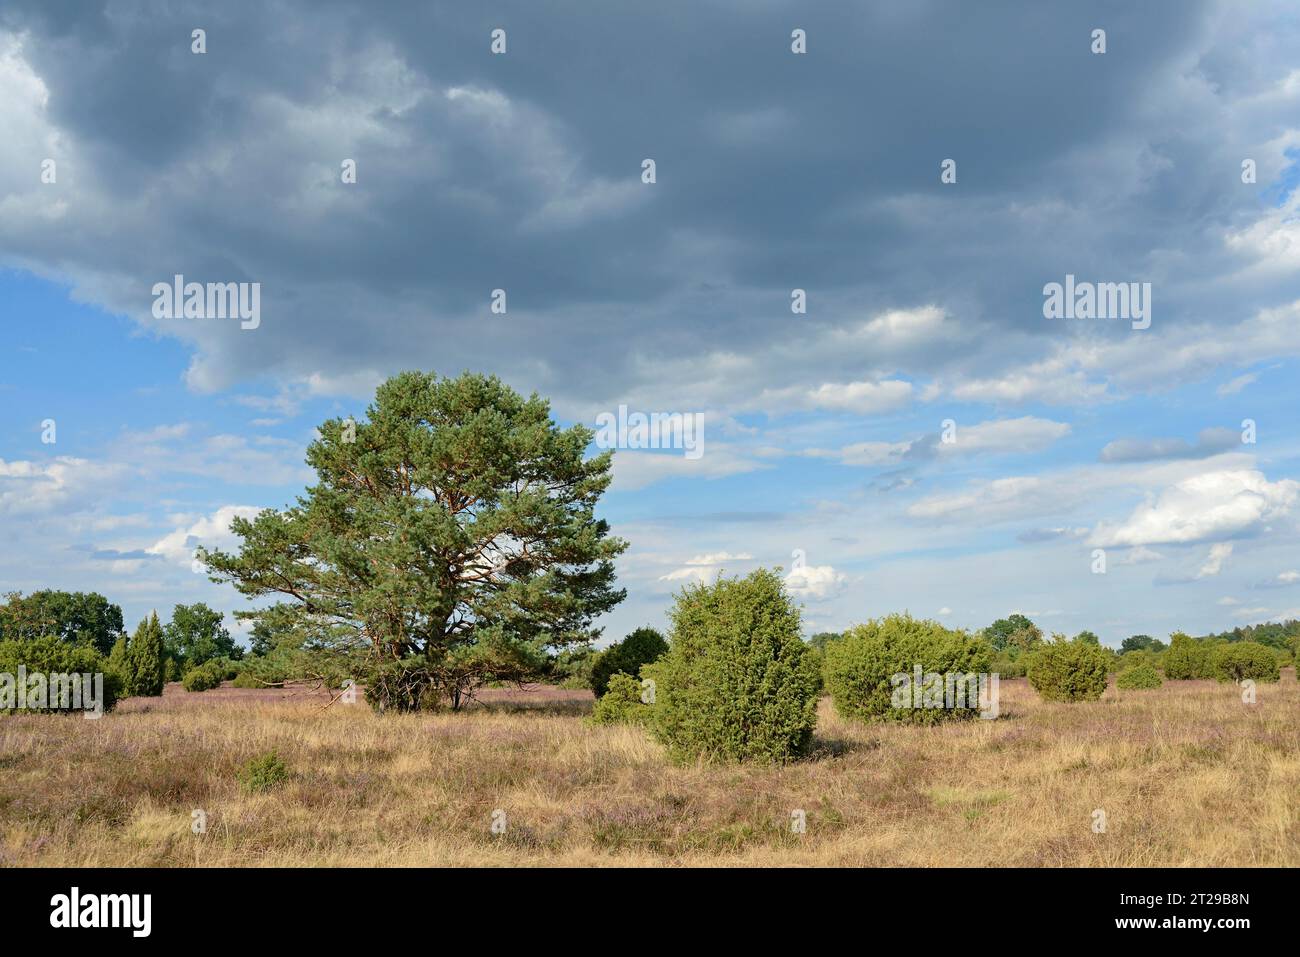 Heathland landscape, typical vegetation, pine (Pinus), solitary tree, juniper (Juniperus communis) and flowering common heather (Calluna Vulgaris) Stock Photo